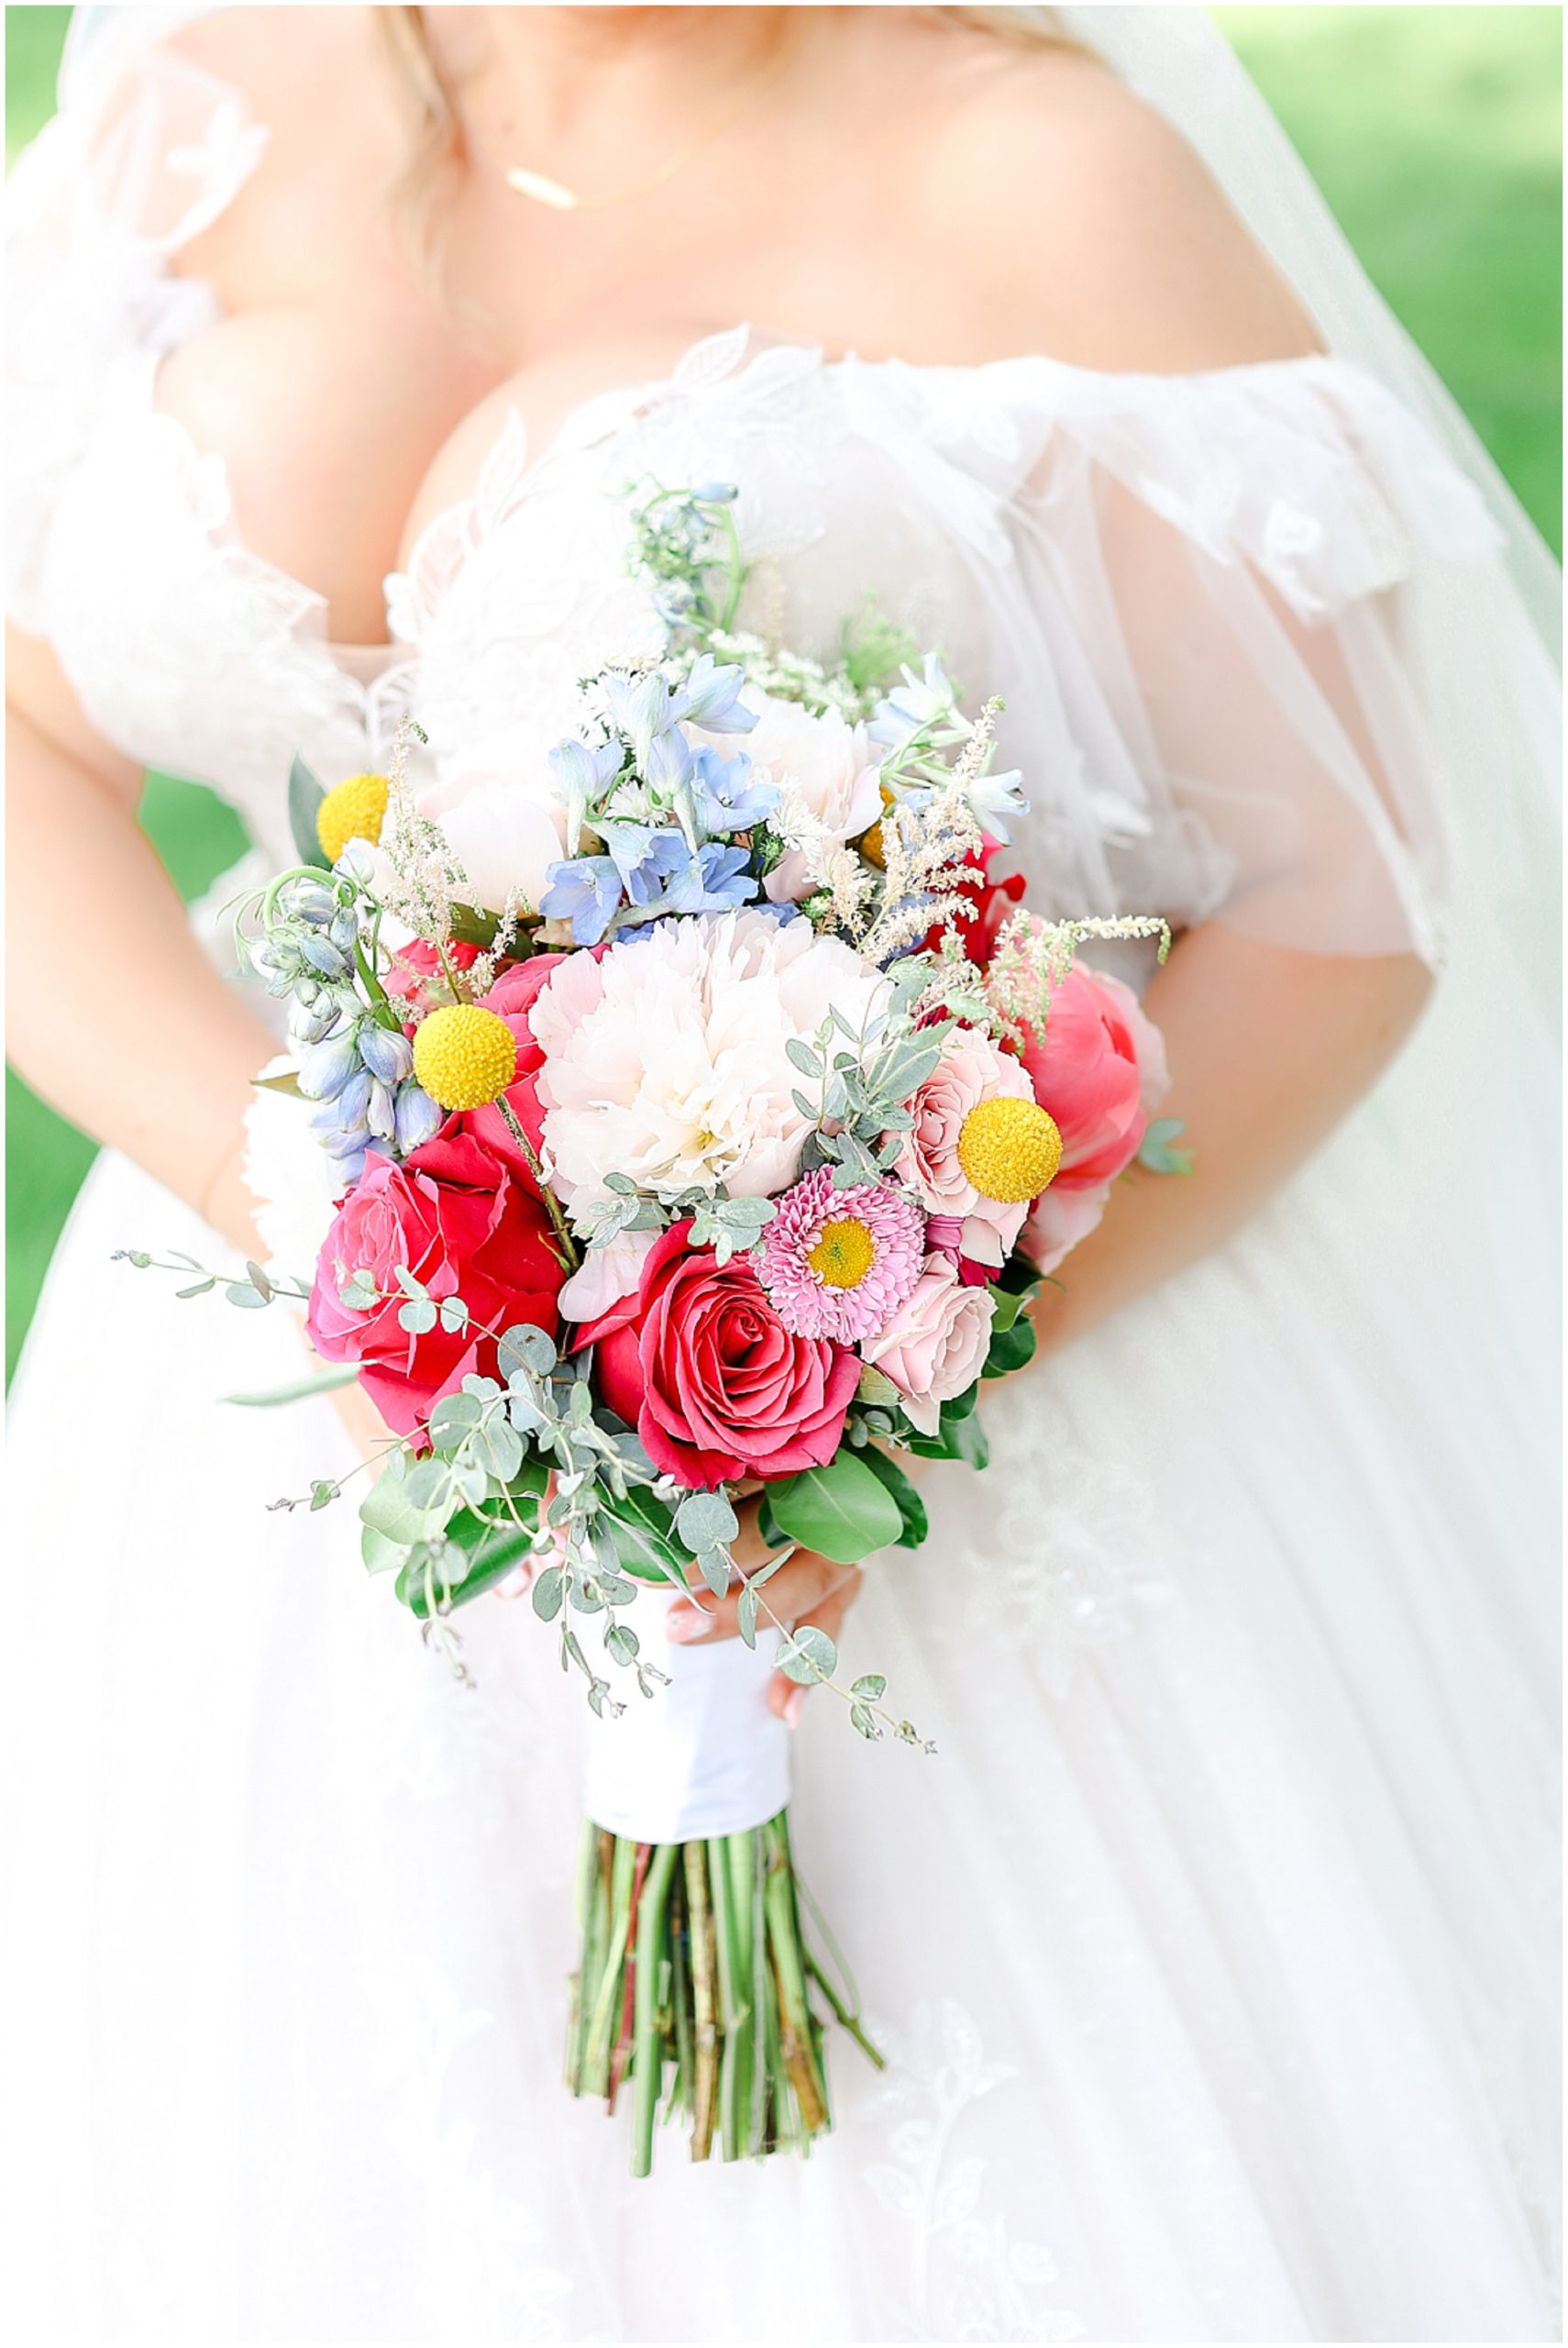 Colorful and Joyful Wedding Photography - Kansas City Wedding Photographer - The Rhapsody - bride and groom wedding portraits - wedding bouquets kansas city